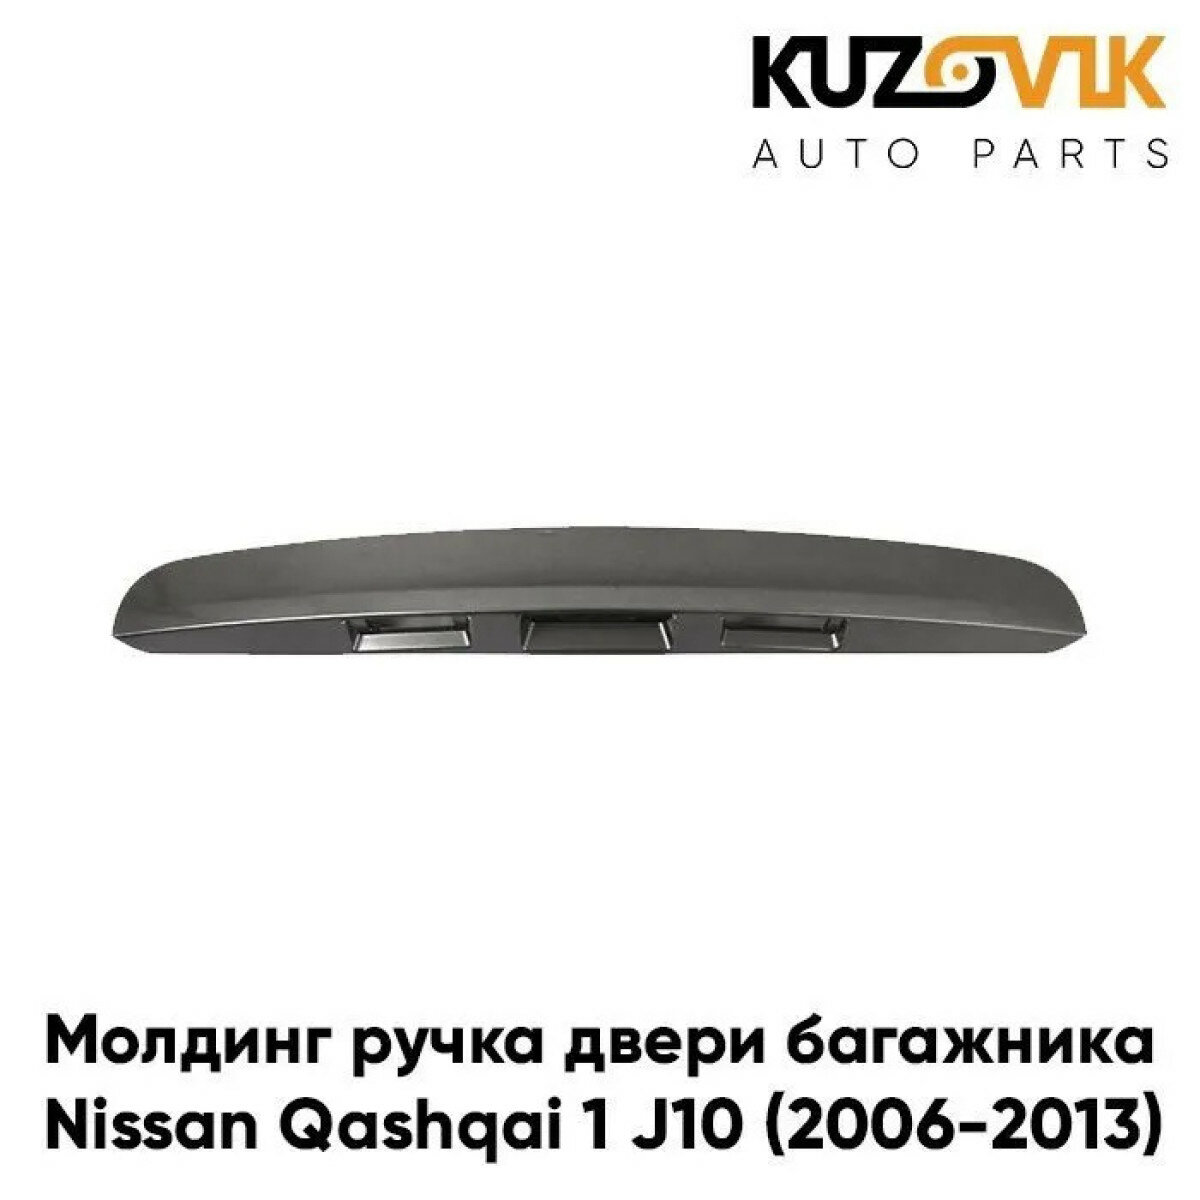 Молдинг ручка двери багажника для Ниссан Кашкай Nissan Qashqai 1 J10 (2006-2013)